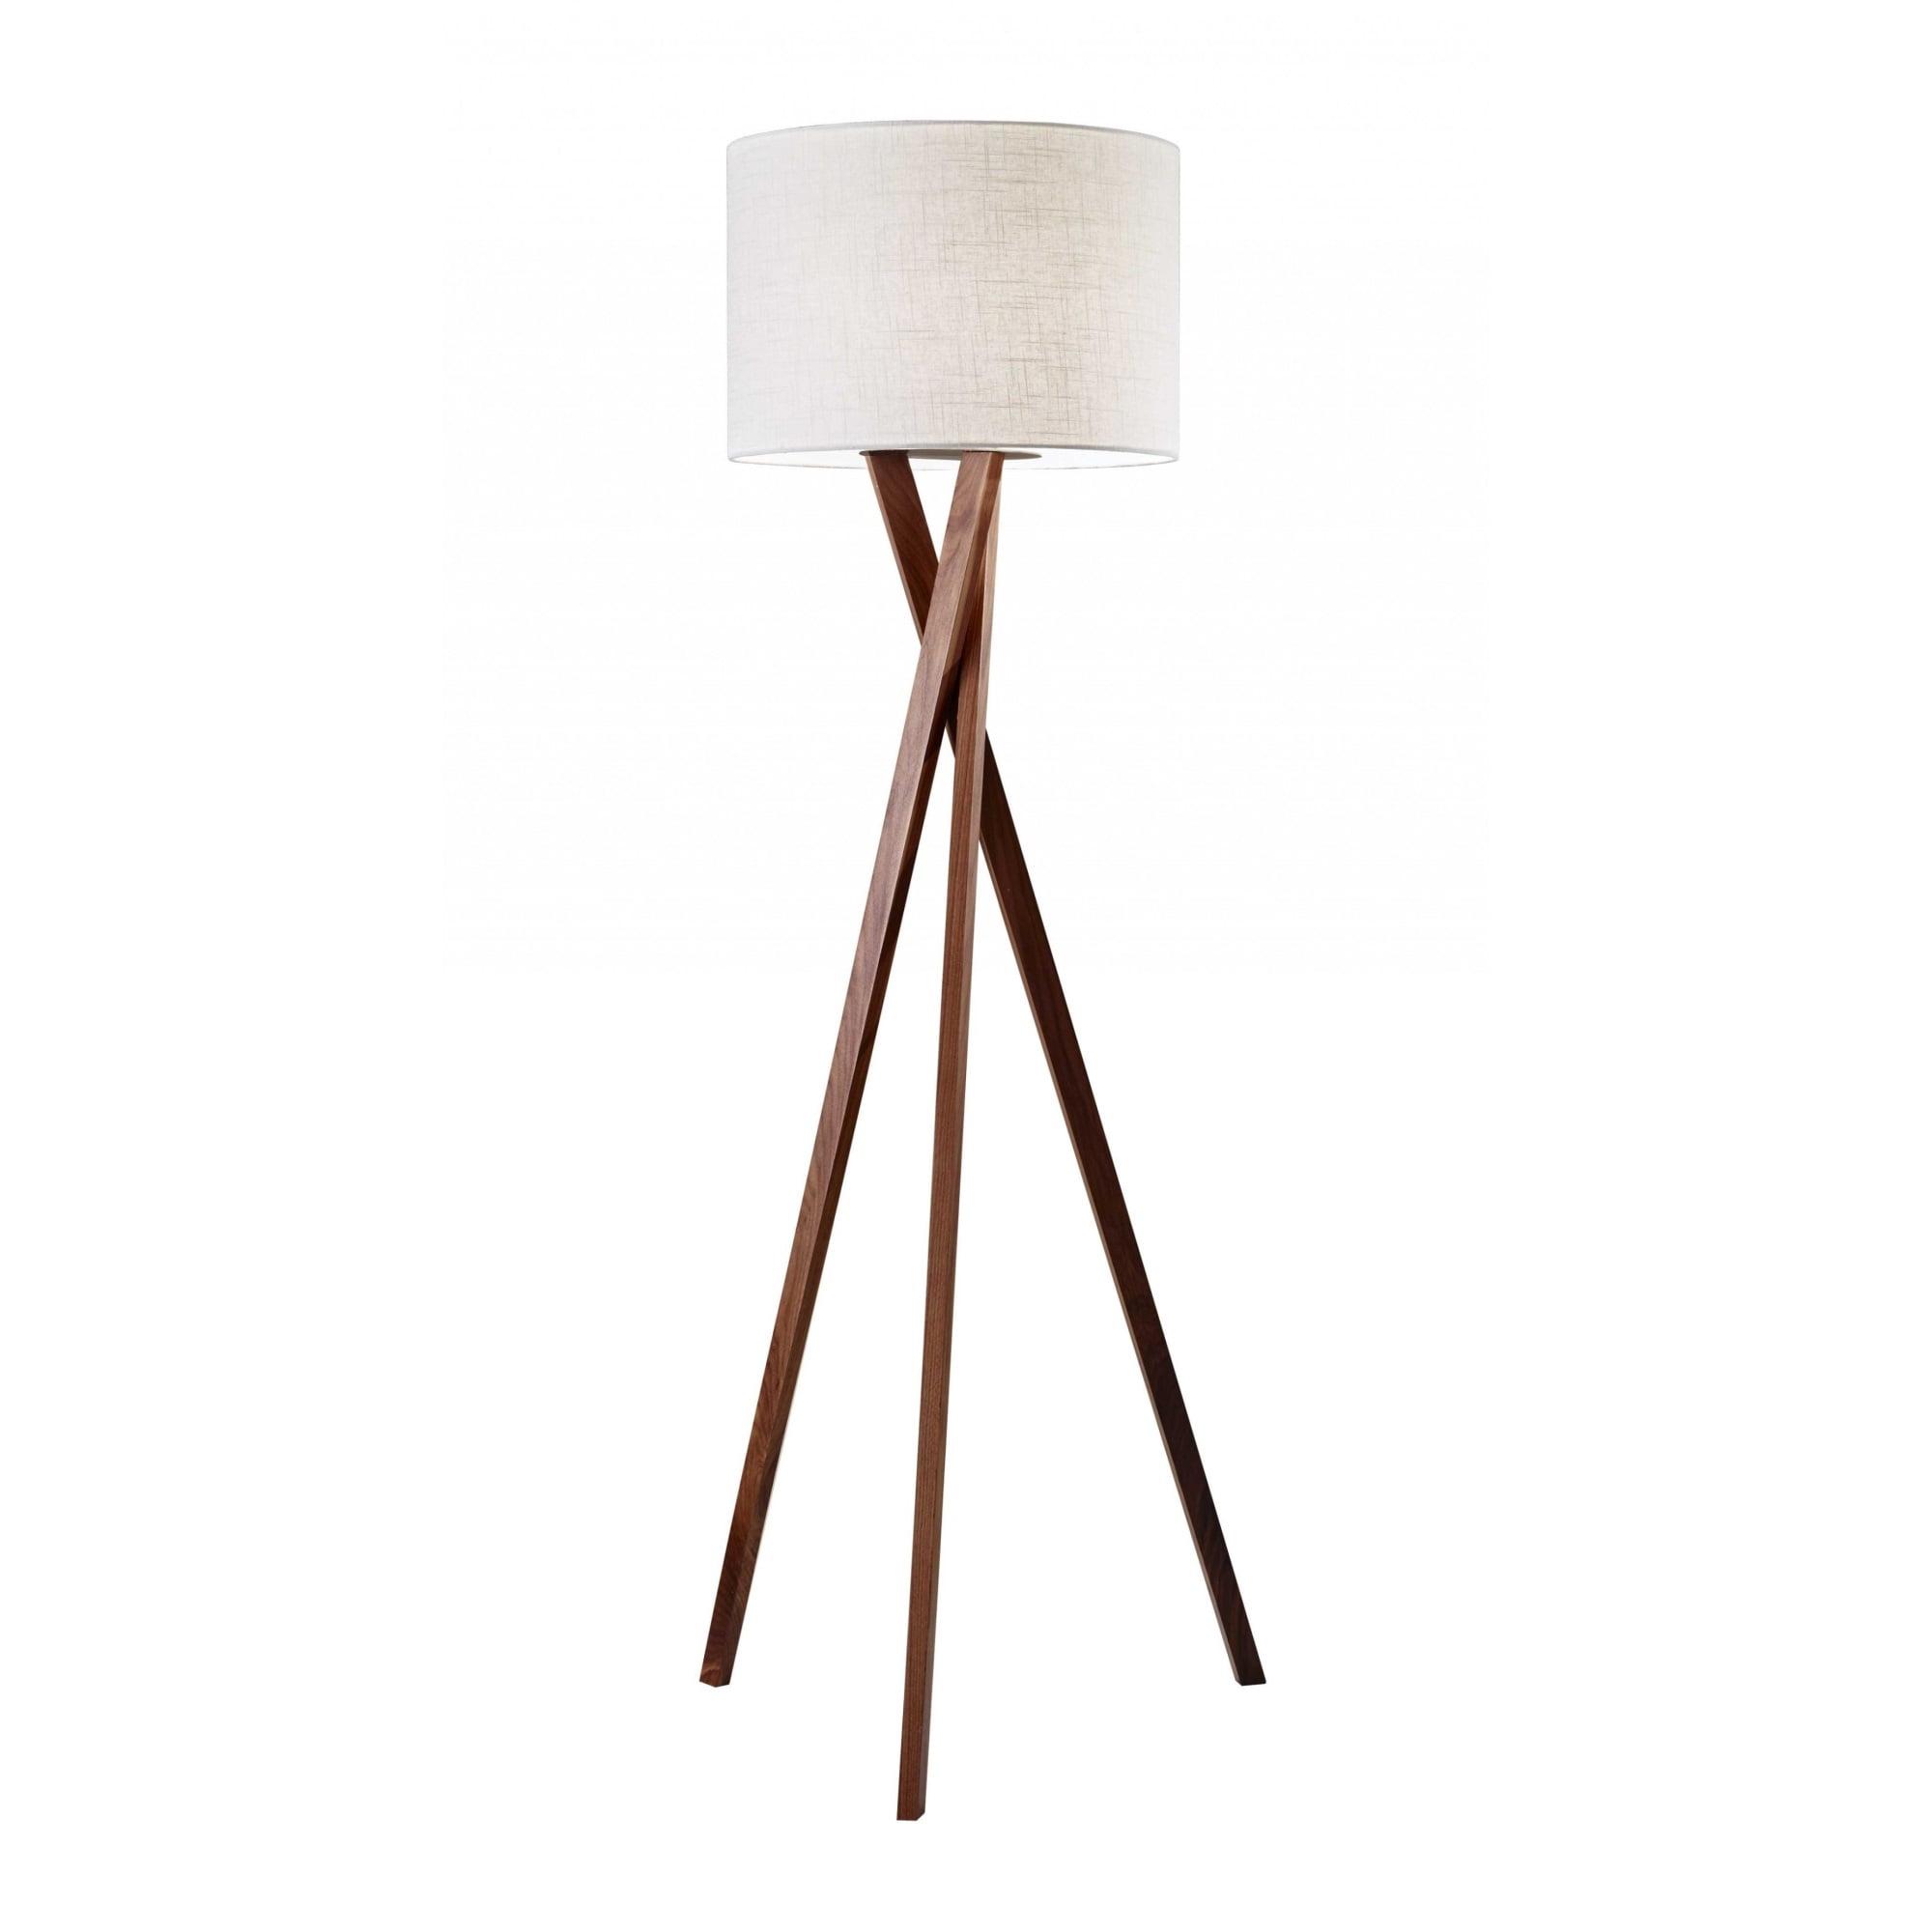 Elegant White Linen Shade Floor Lamp with Light Walnut Tripod Base